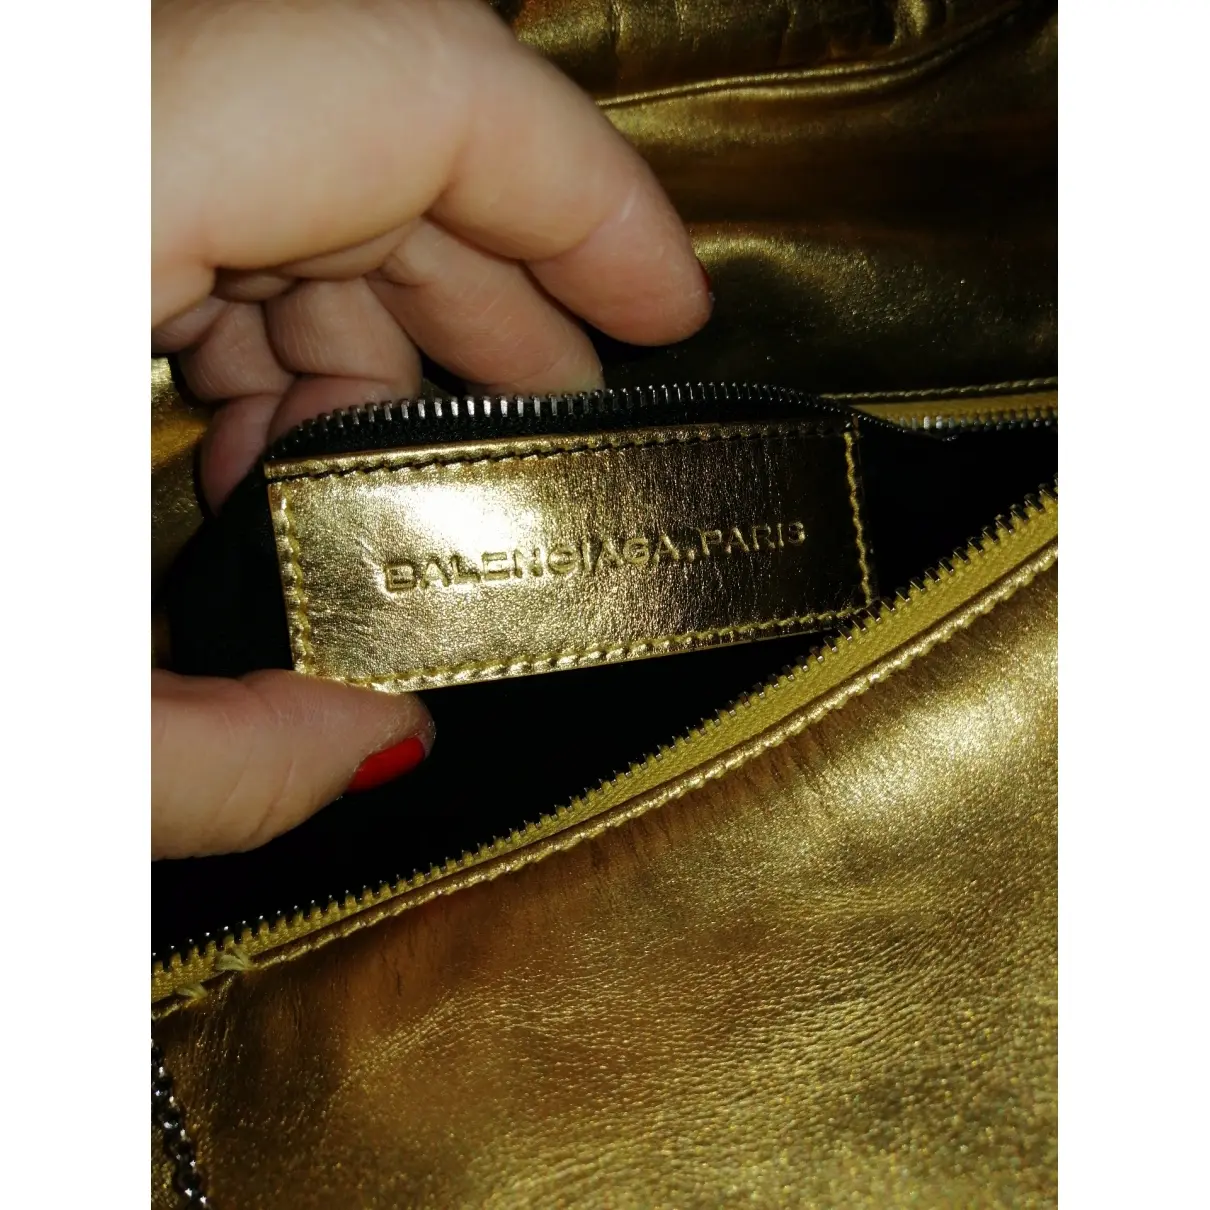 Buy Balenciaga Monday Bowling leather handbag online